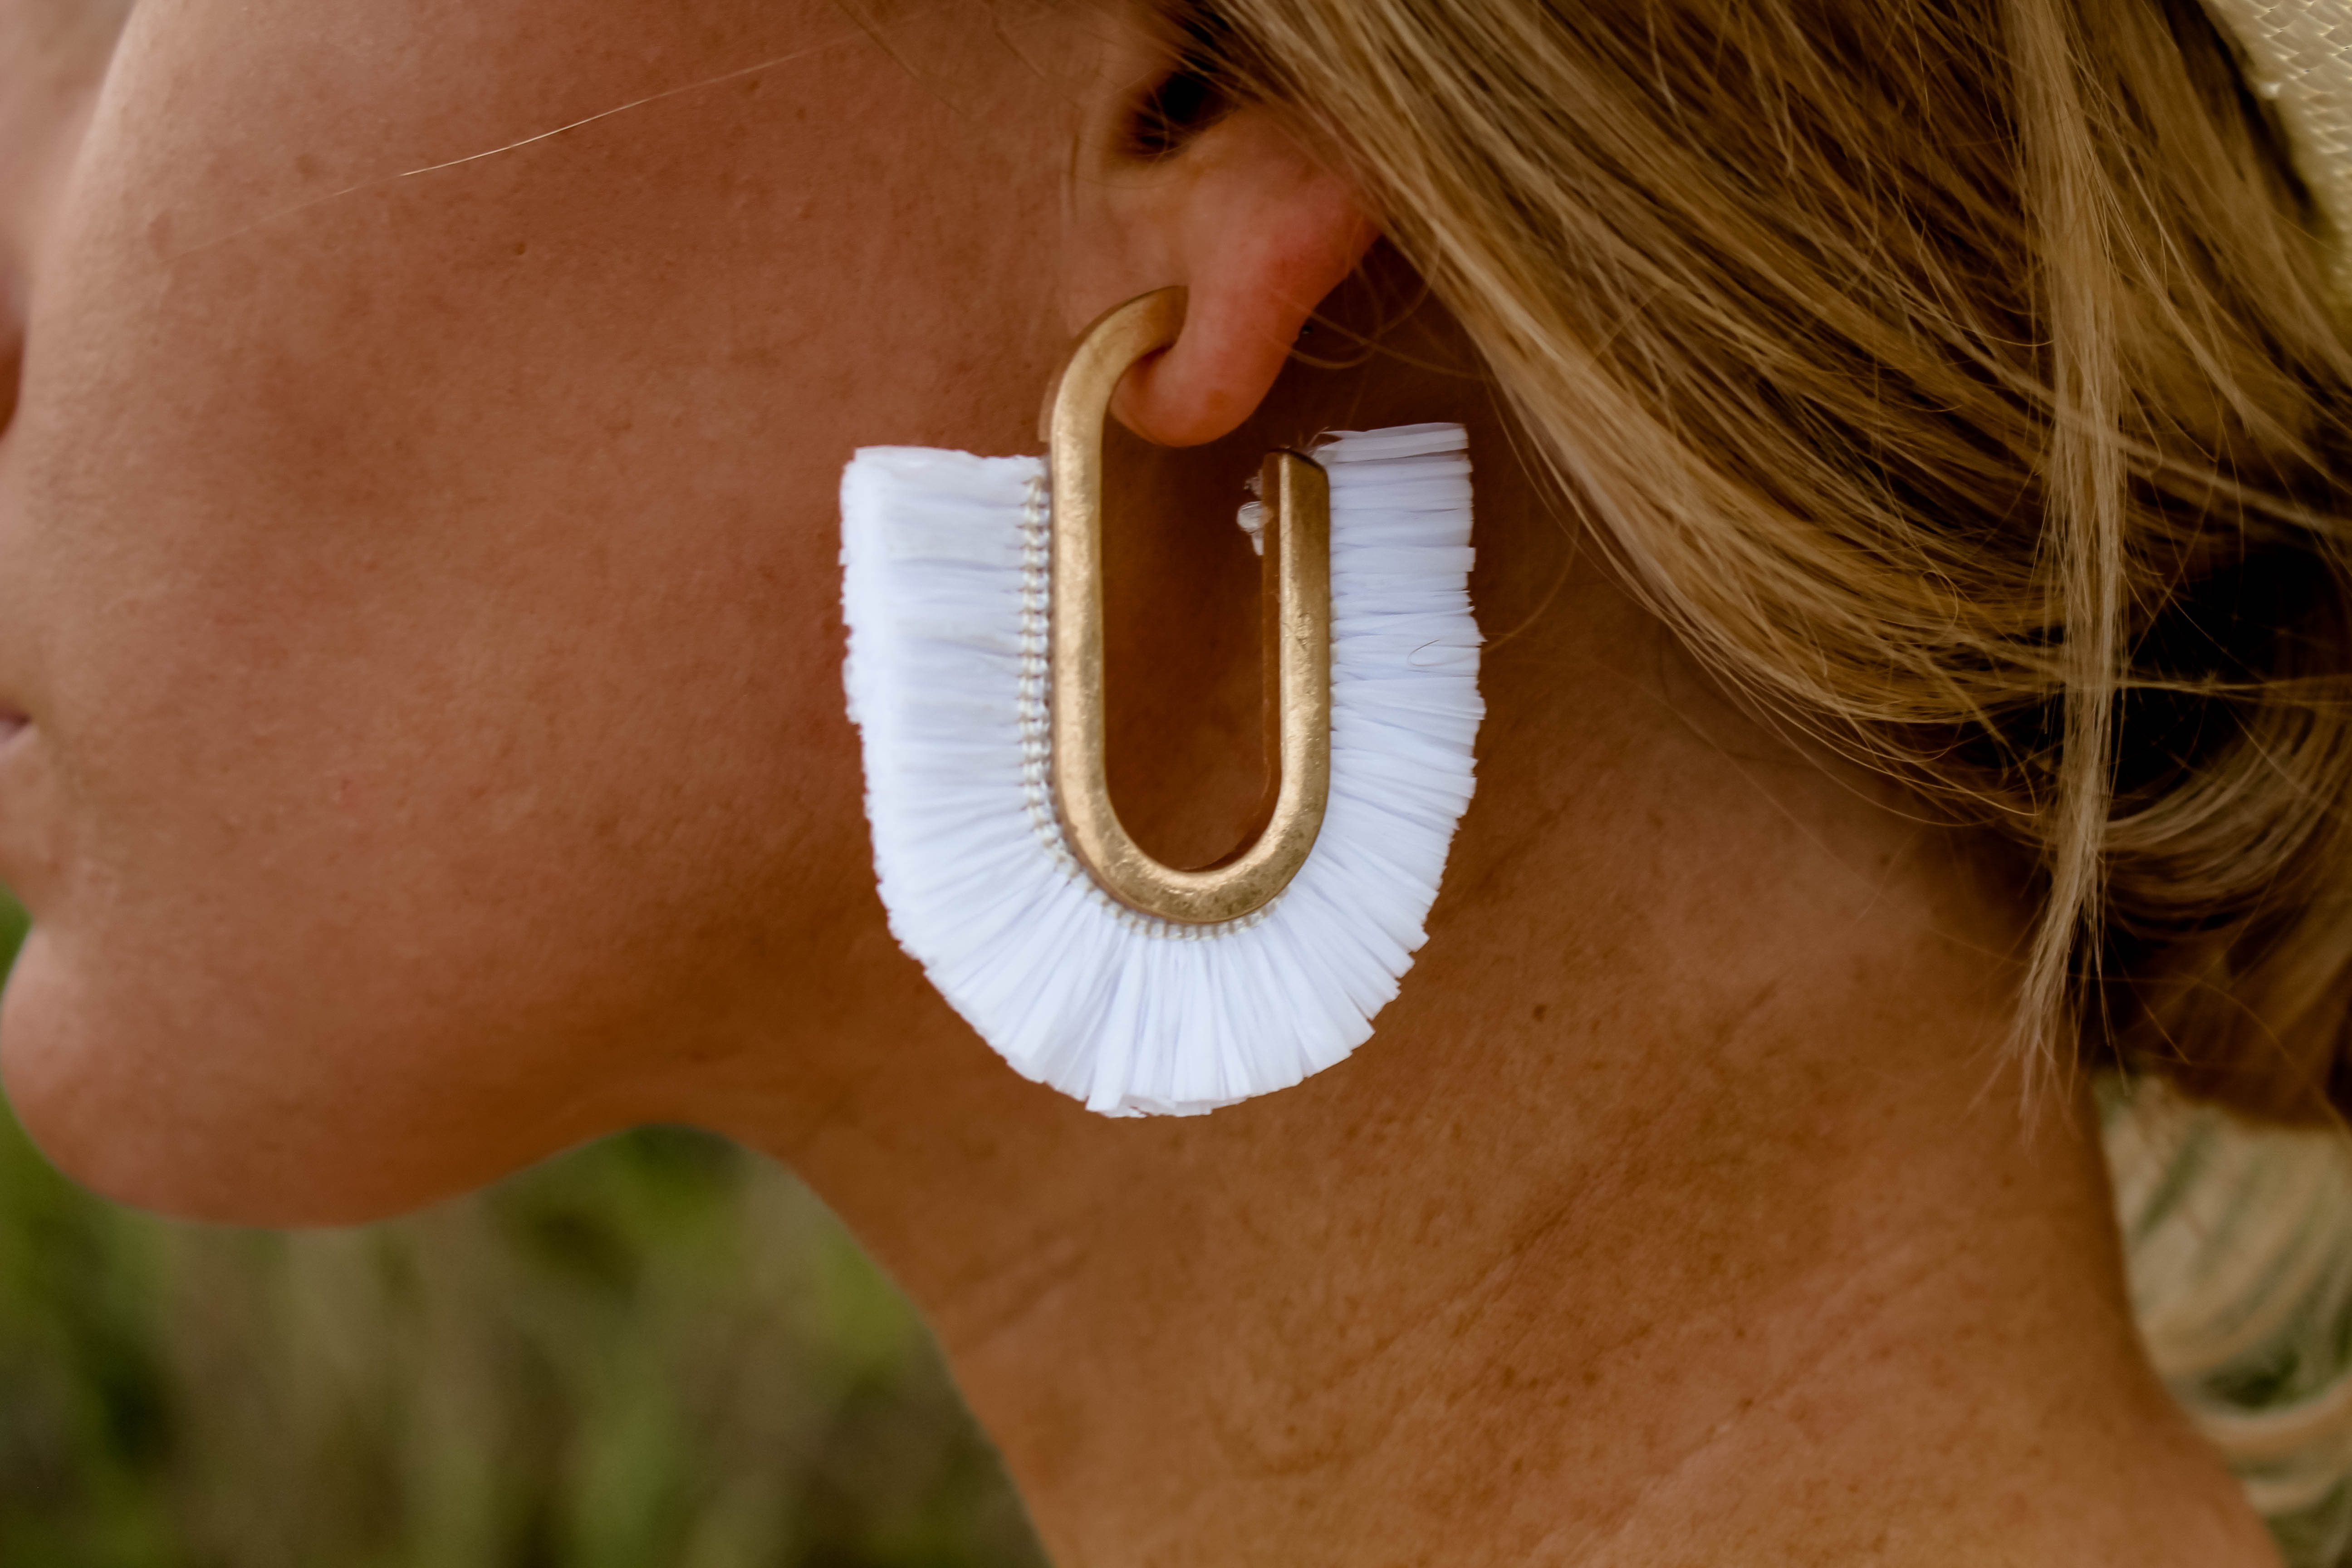 Whitewater Earrings